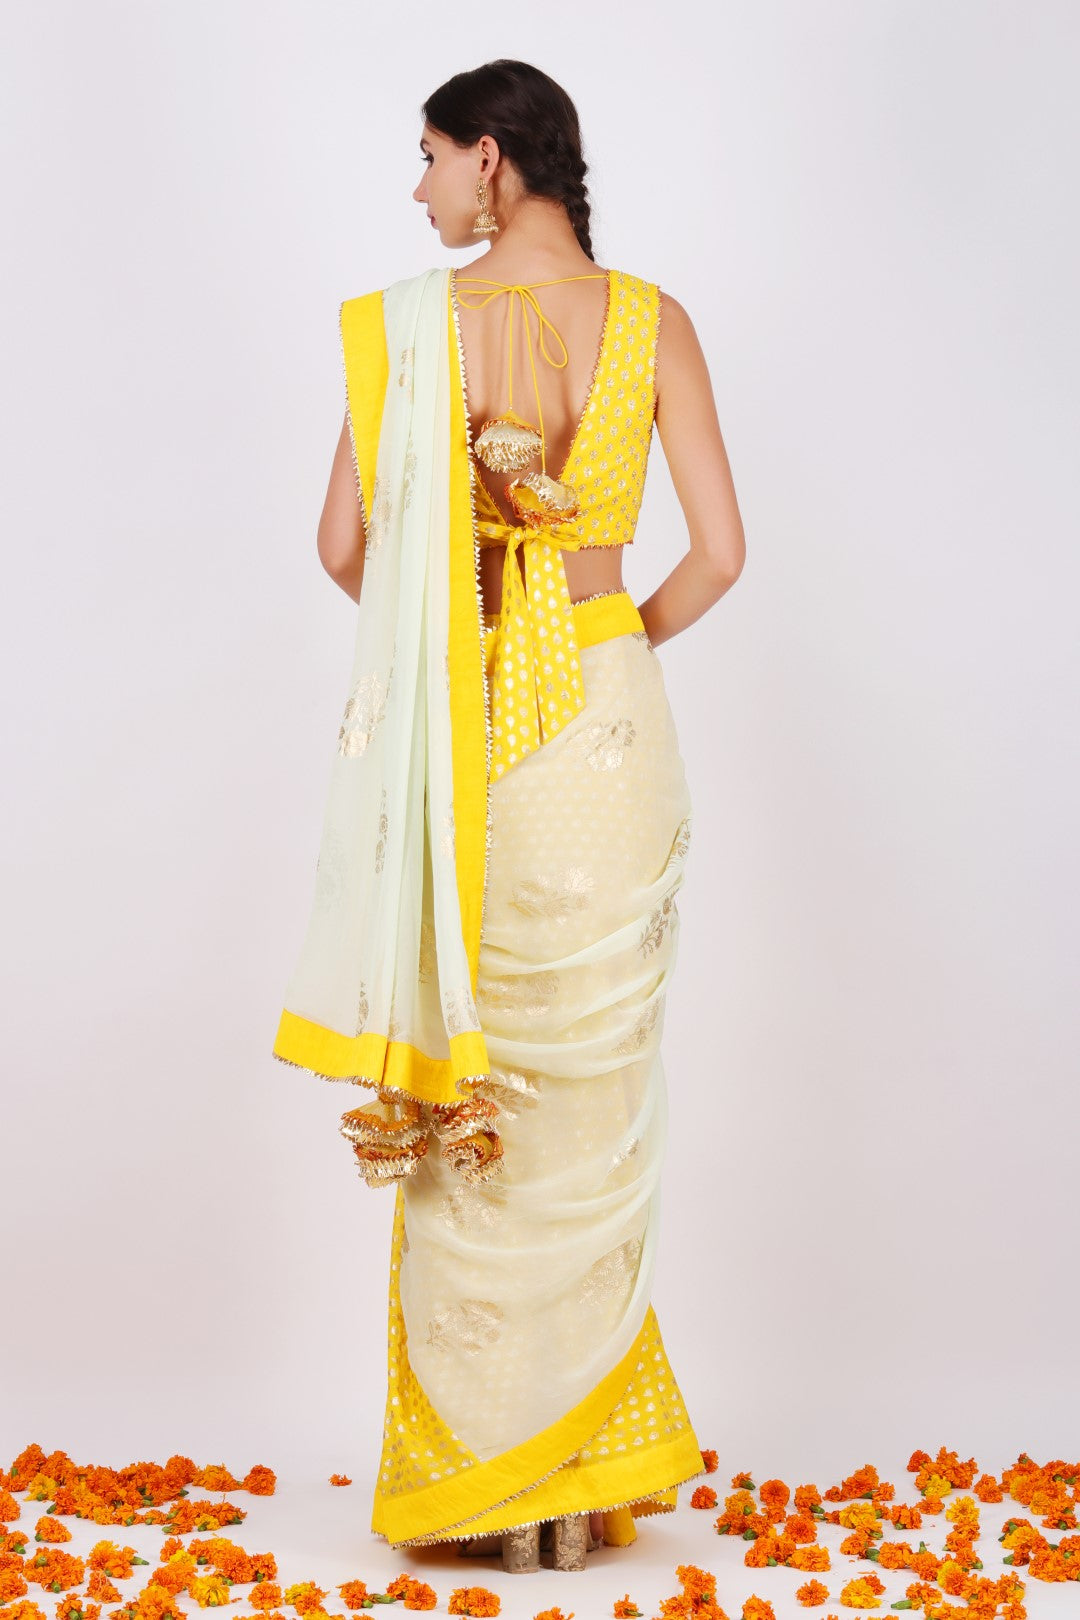 Pista georgette jaipuri guldasta foil printed palla sari with yellow jasmine bud foil printed tie up back blouse